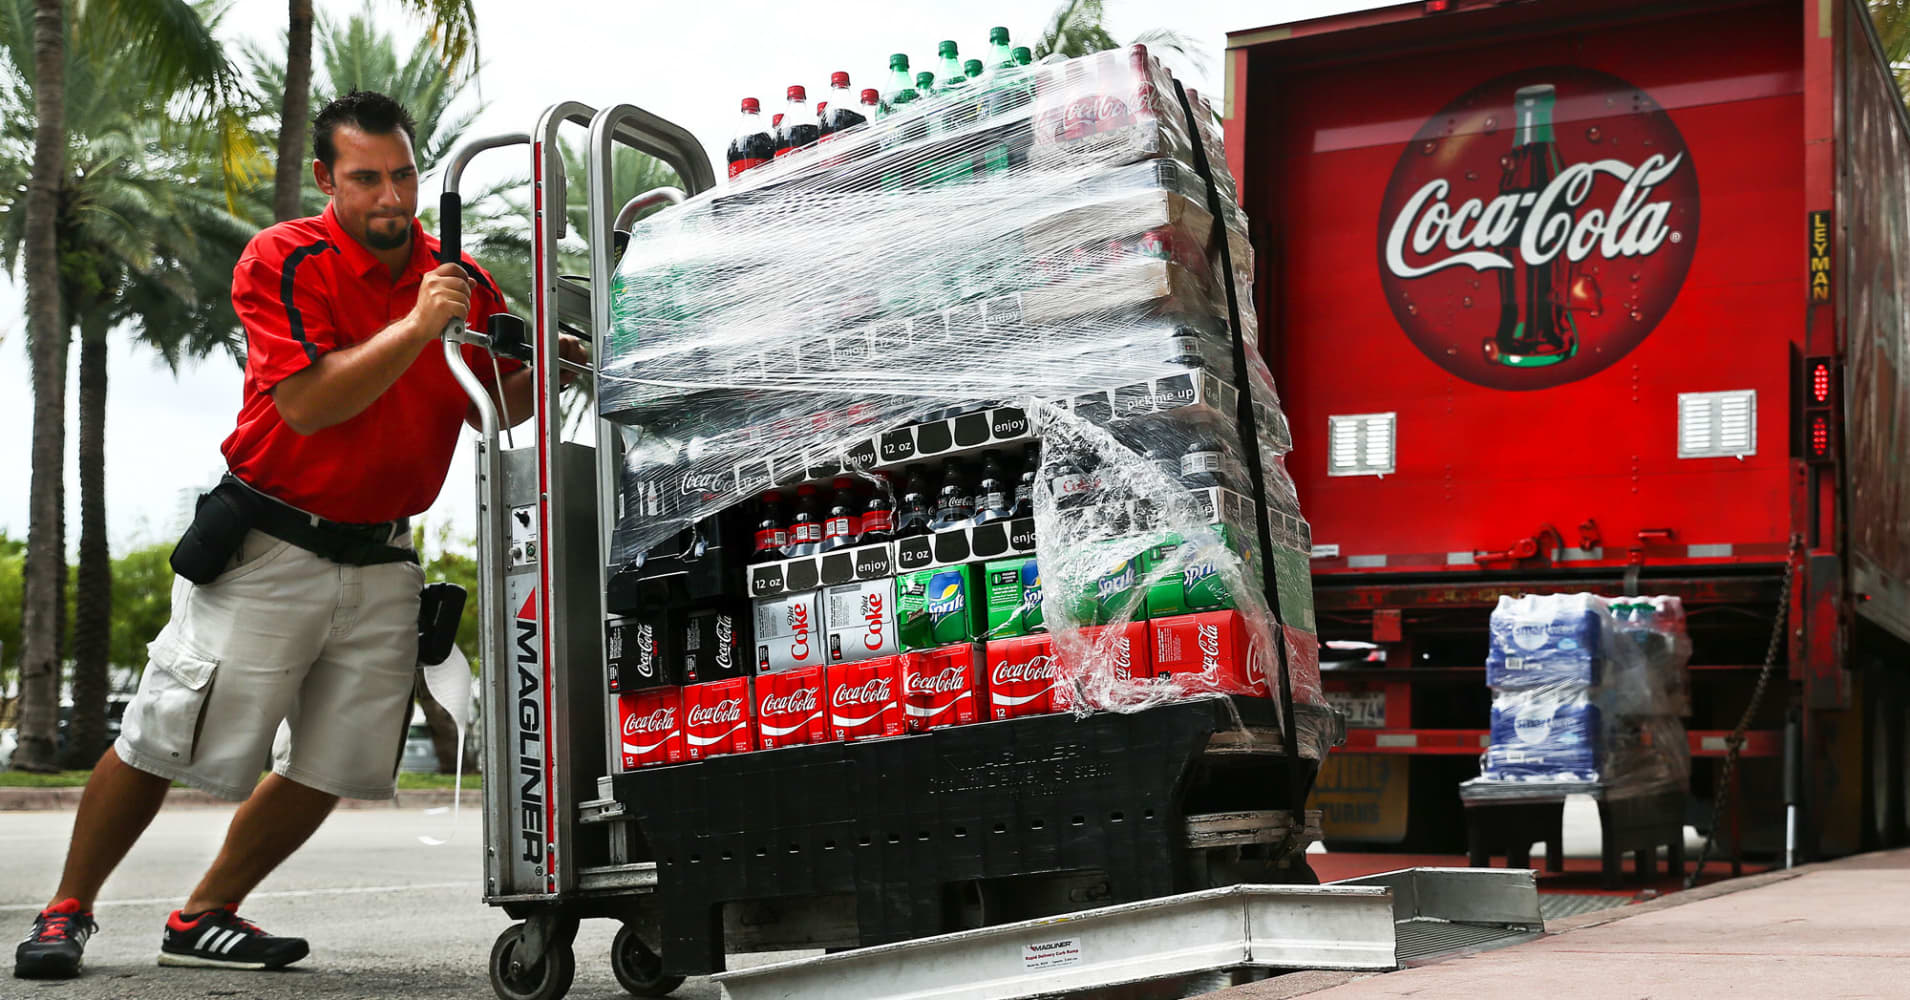 Sell Coca-Cola on weak soda sales, Goldman Sachs says